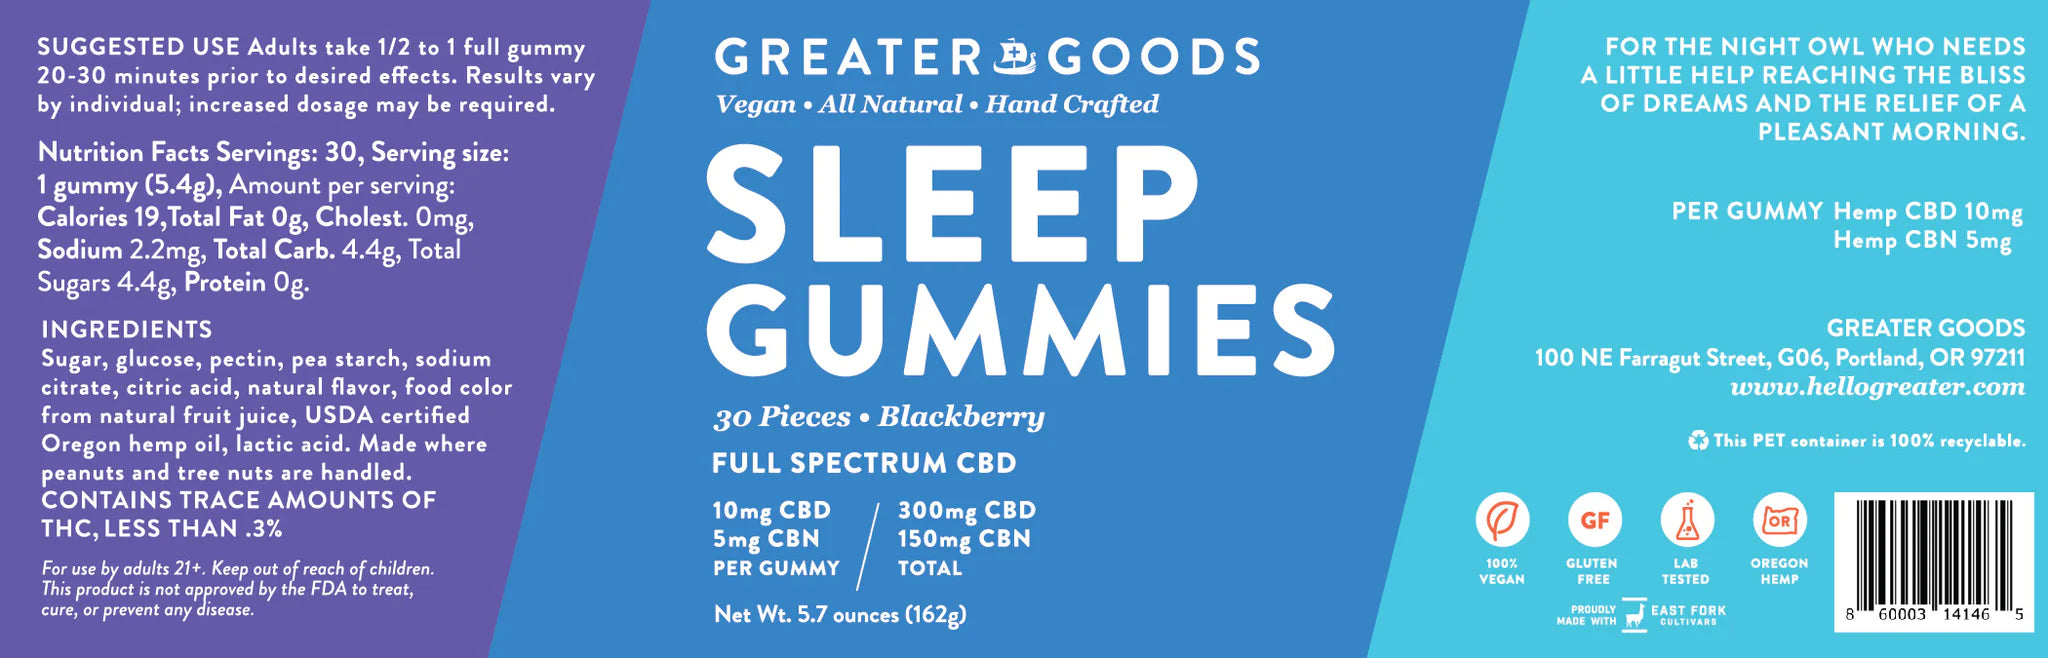 Greater Goods, Full Spectrum, CBD Gummies, Sleep, Blackberry Flavor, 30pc, 300mg CBD + 150mg CBN